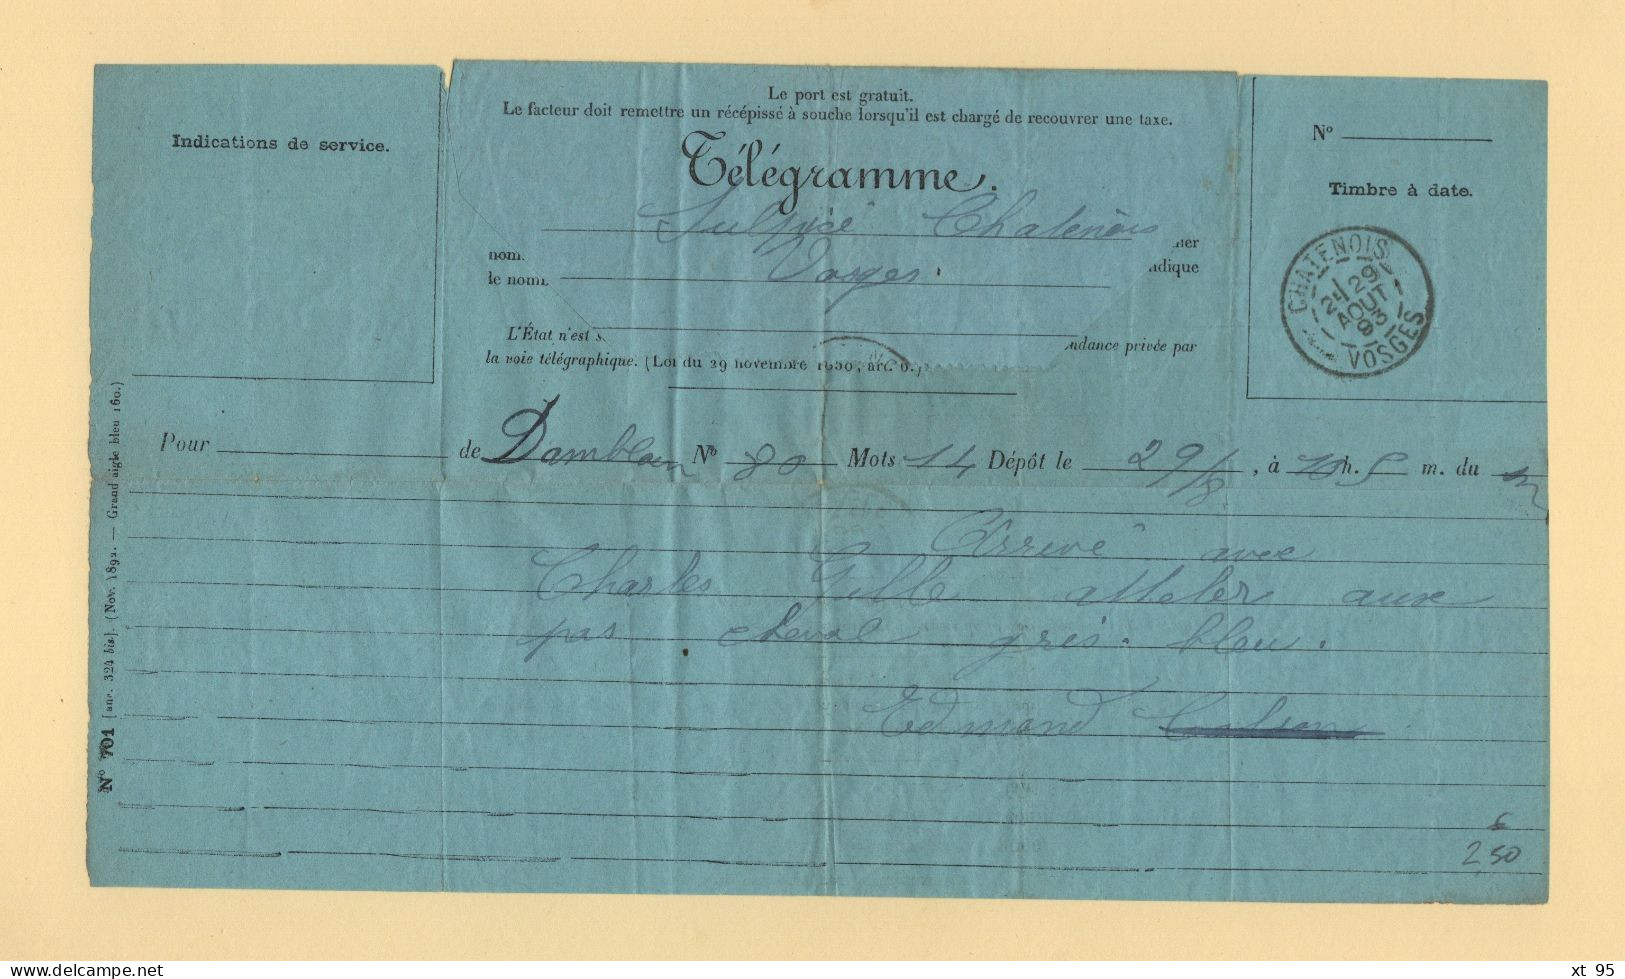 Chatenois - Vosges - 1893 - Telegramme - 1877-1920: Semi Modern Period